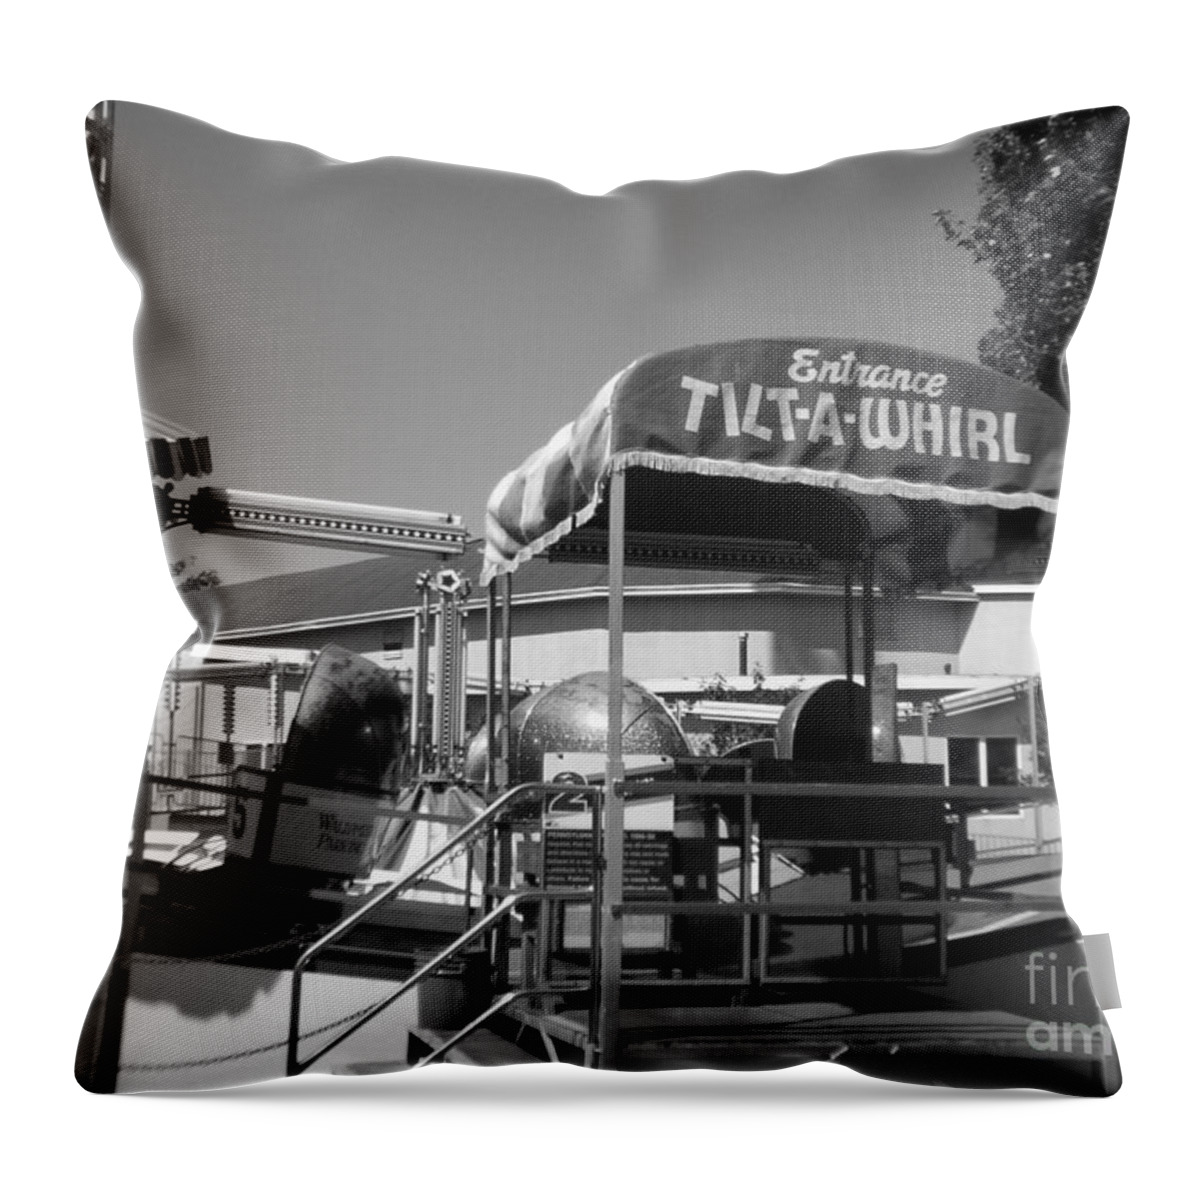 Tilt-a-whirl Throw Pillow featuring the photograph Whirl Wind by Michael Krek